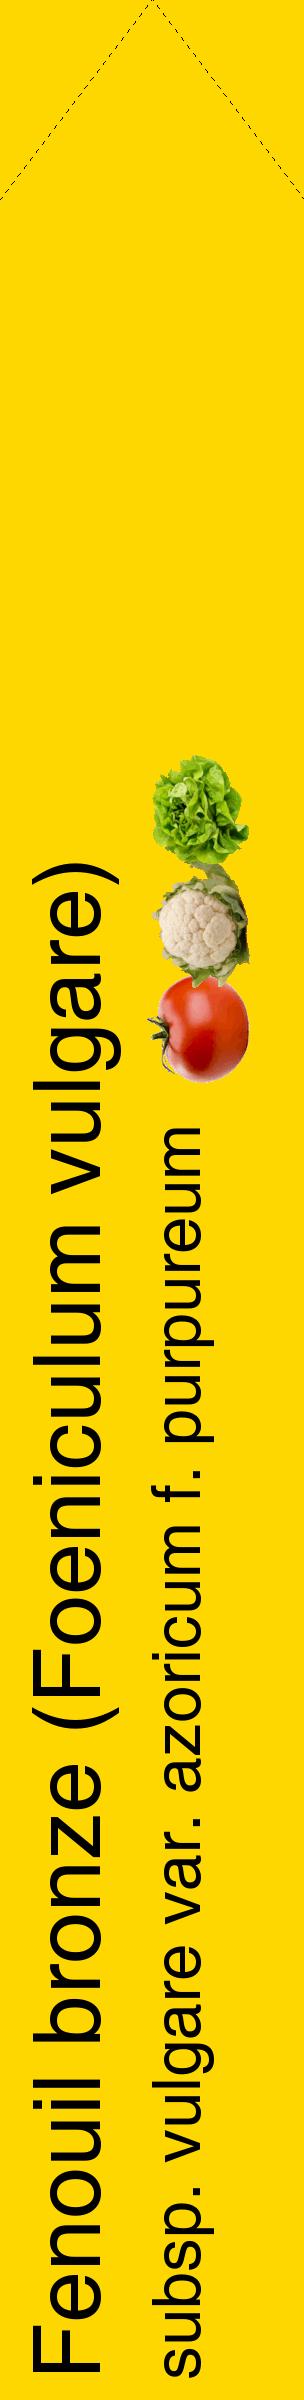 Étiquette de : Foeniculum vulgare subsp. vulgare var. azoricum f. purpureum - format c - style noire21_simplehel avec comestibilité simplifiée